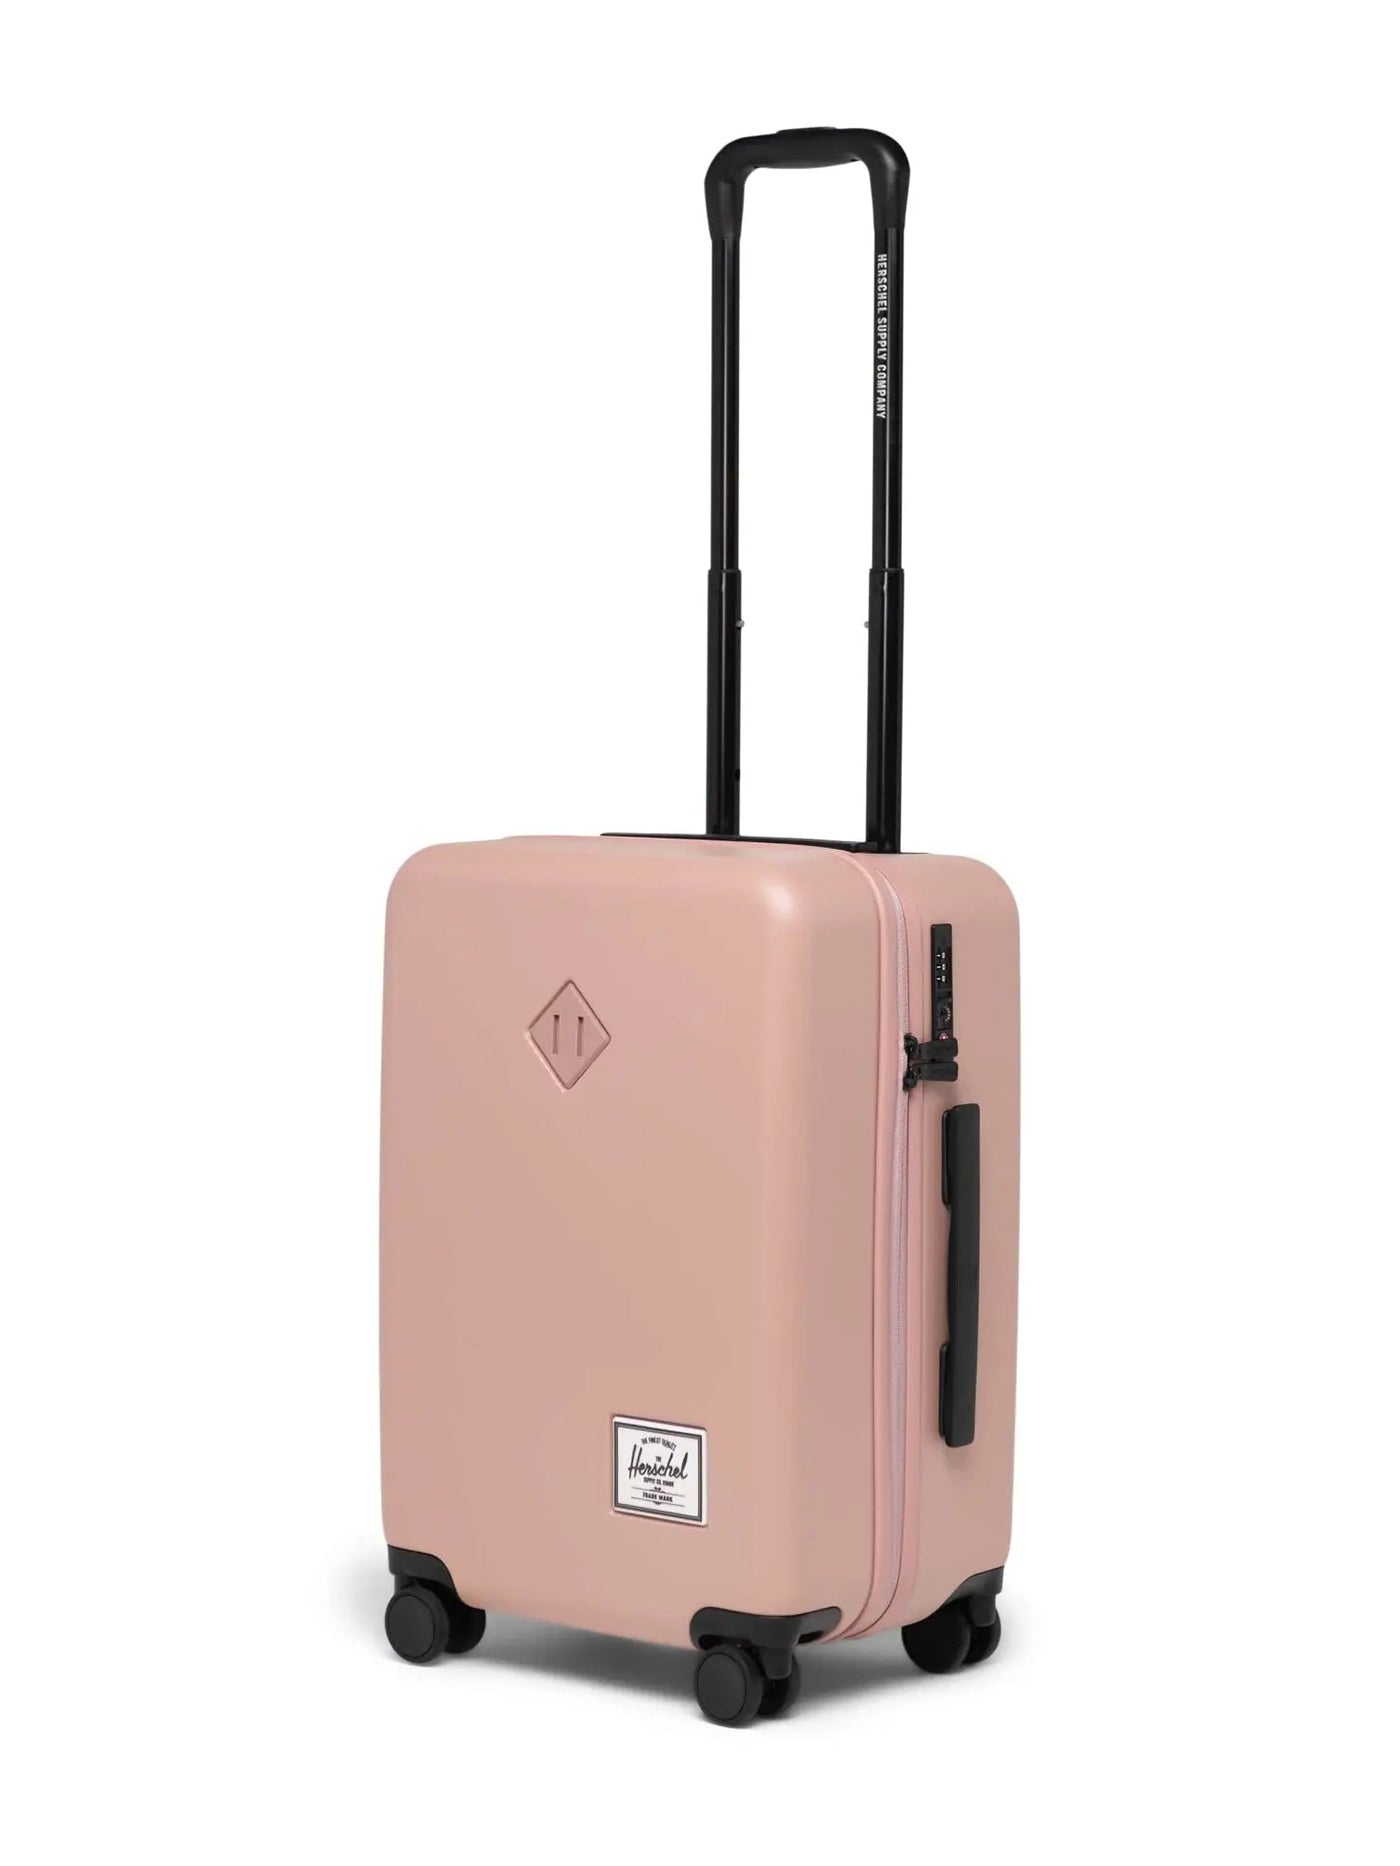 Herschel Heritage Hardshell Large Carry On Suitcase